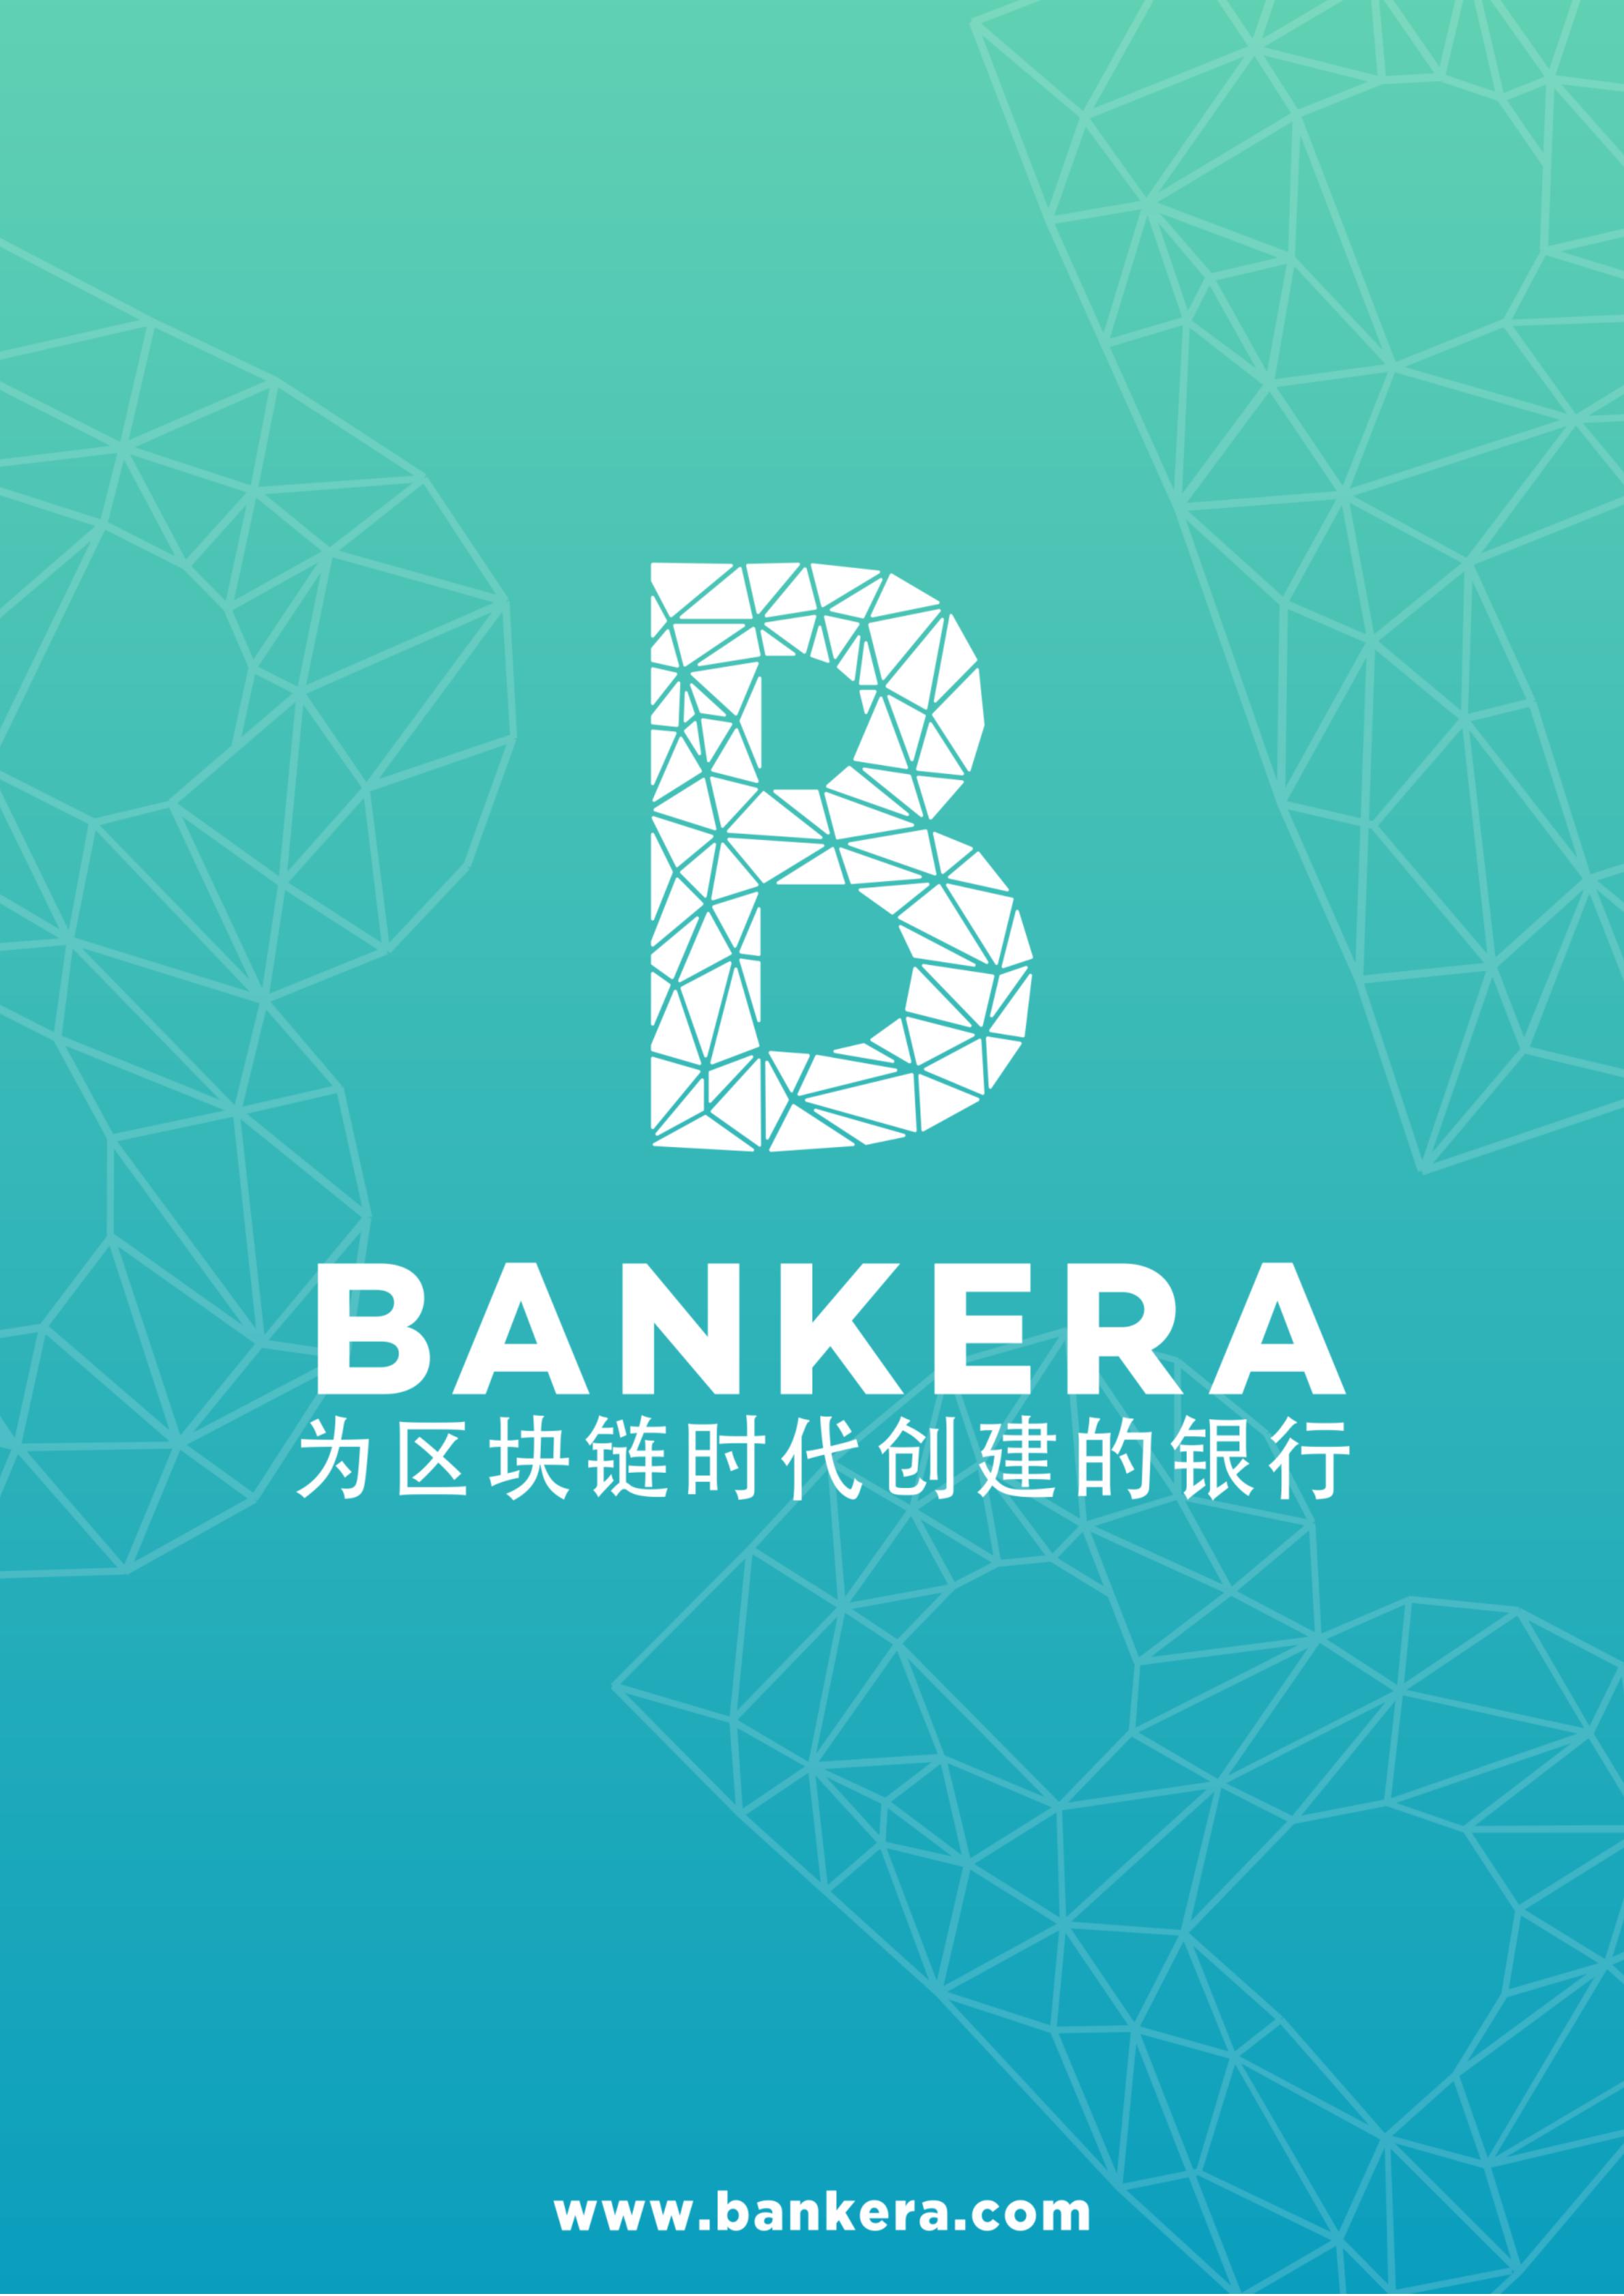 BNK_Bankera_whitepaper_zhCN_00.jpg